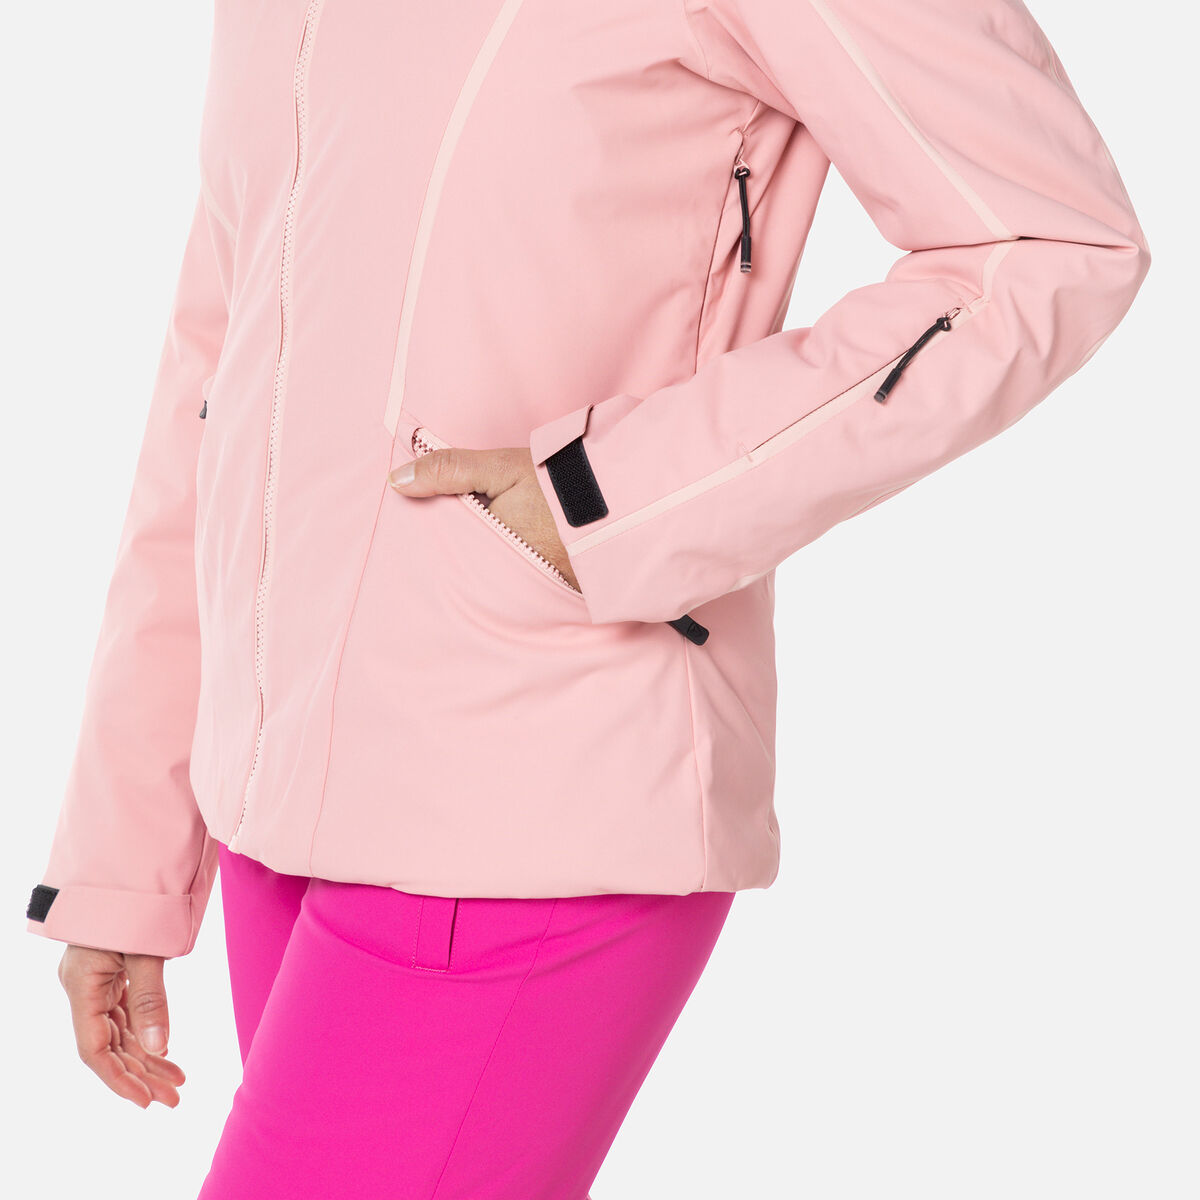 Rossignol Veste de ski Flat femme pinkpurple